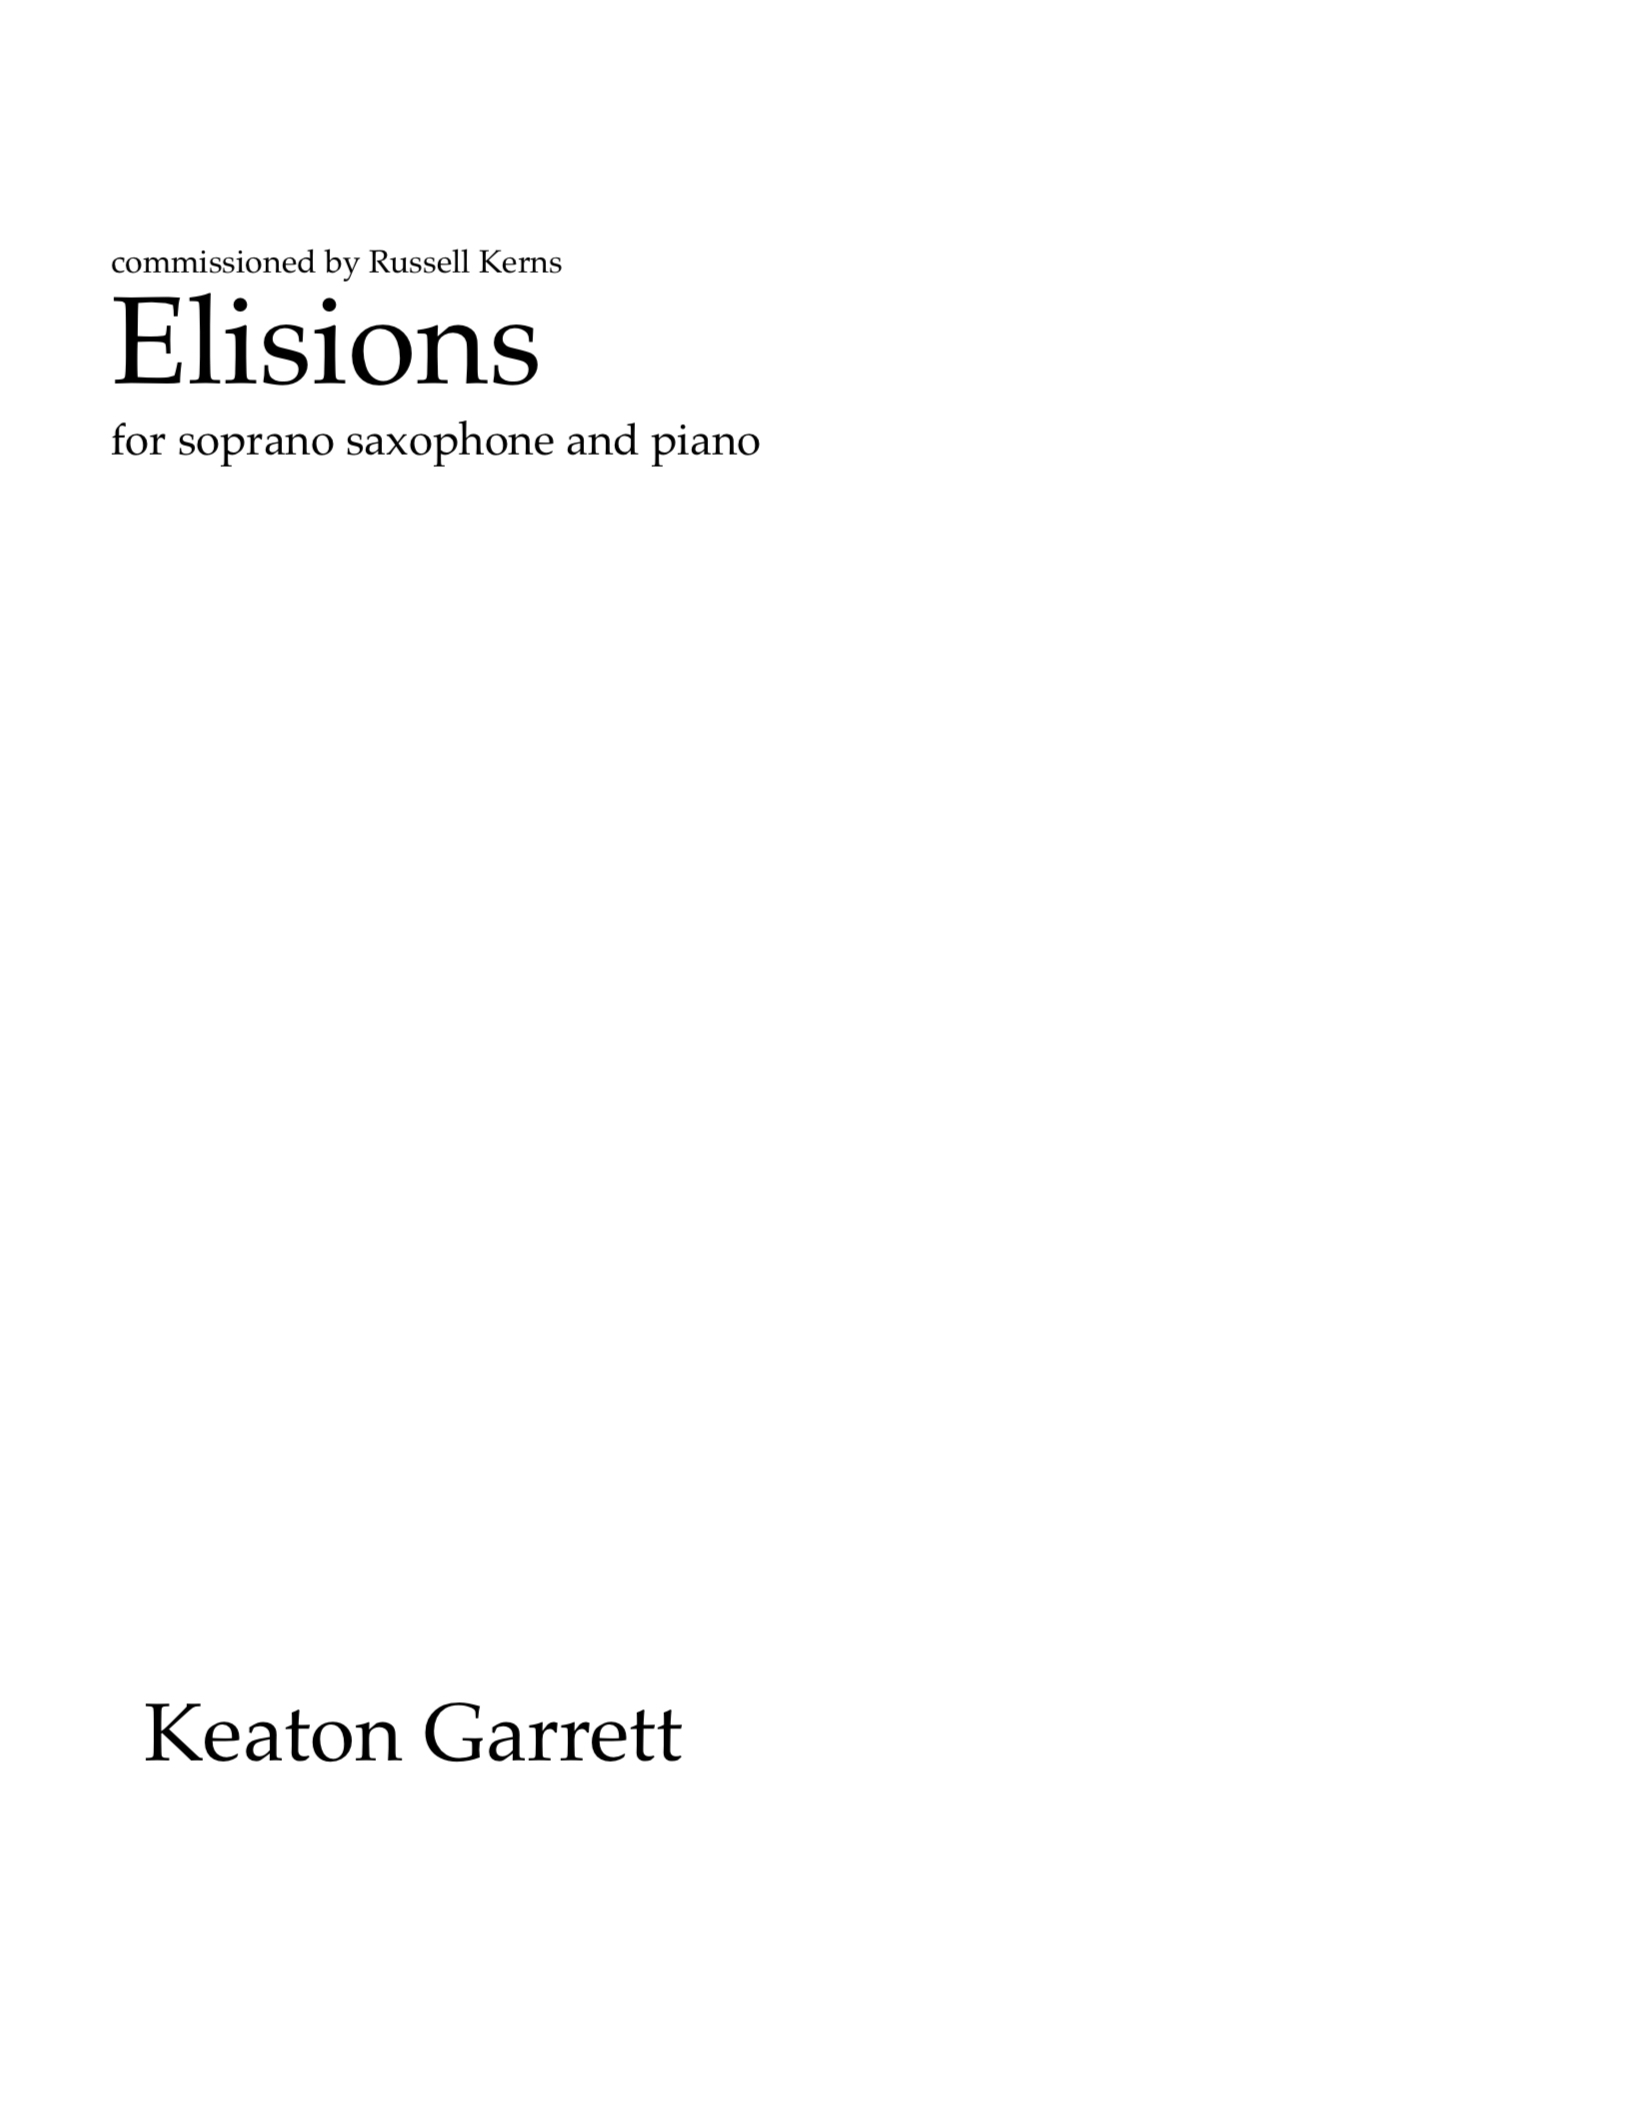 Elisions by Keaton Garrett